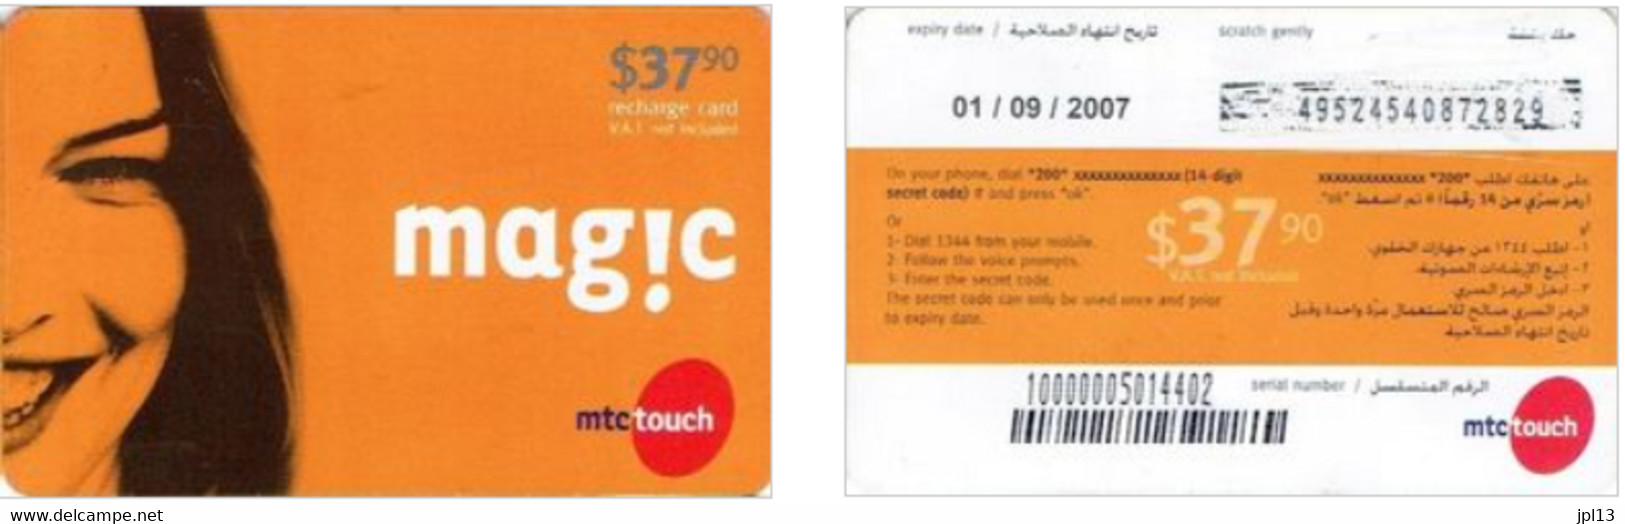 Recharge GSM - Liban - MTC Touch - Magic - Woman $37,90, Exp. 02/02/2007 - Lebanon